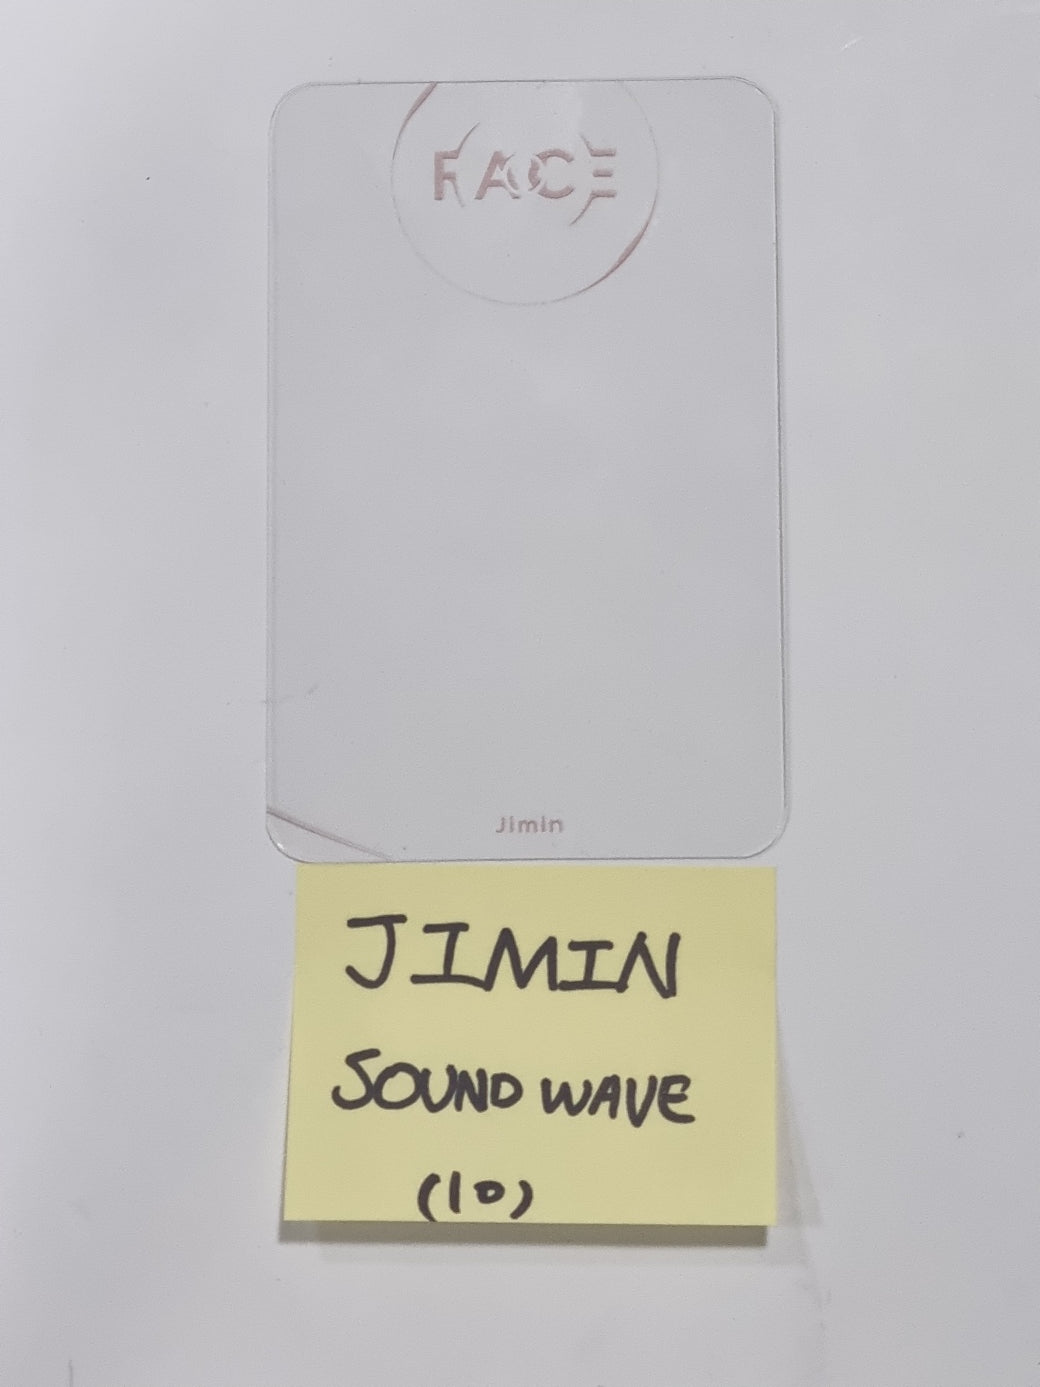 Jimin (Of BTS) "FACE" - Soundwave Pre-Order Benefit transparent PVC Photocard